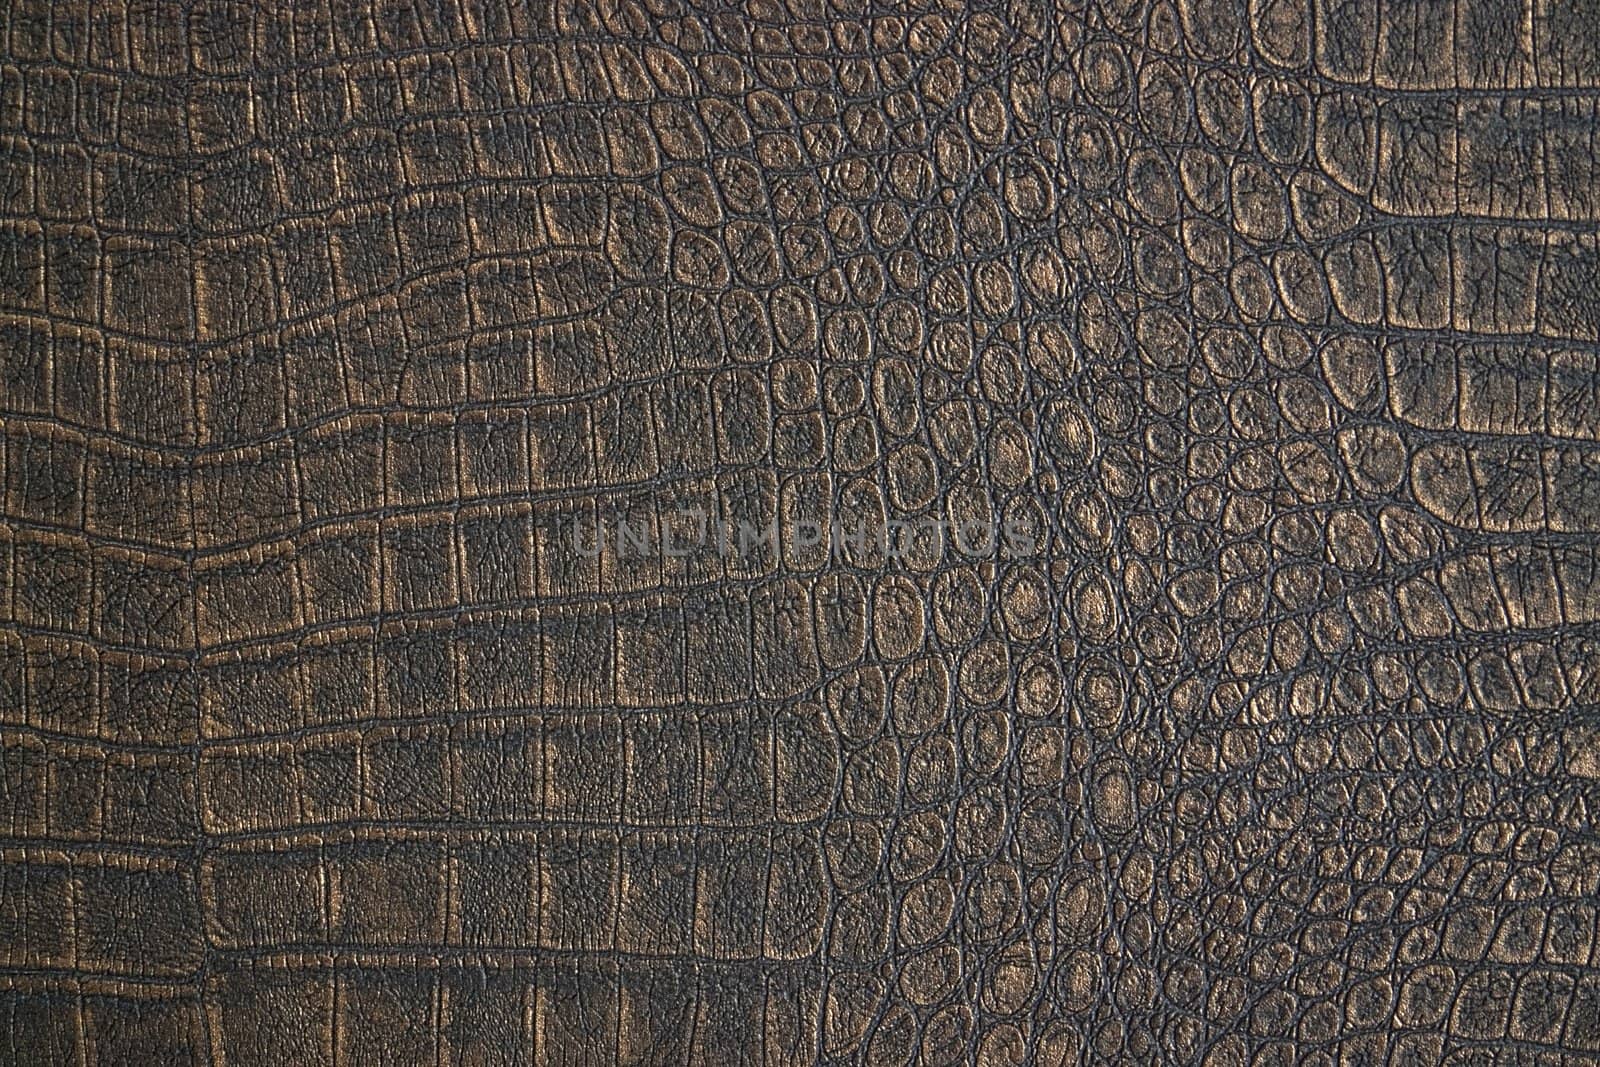 scales detail by gewoldi